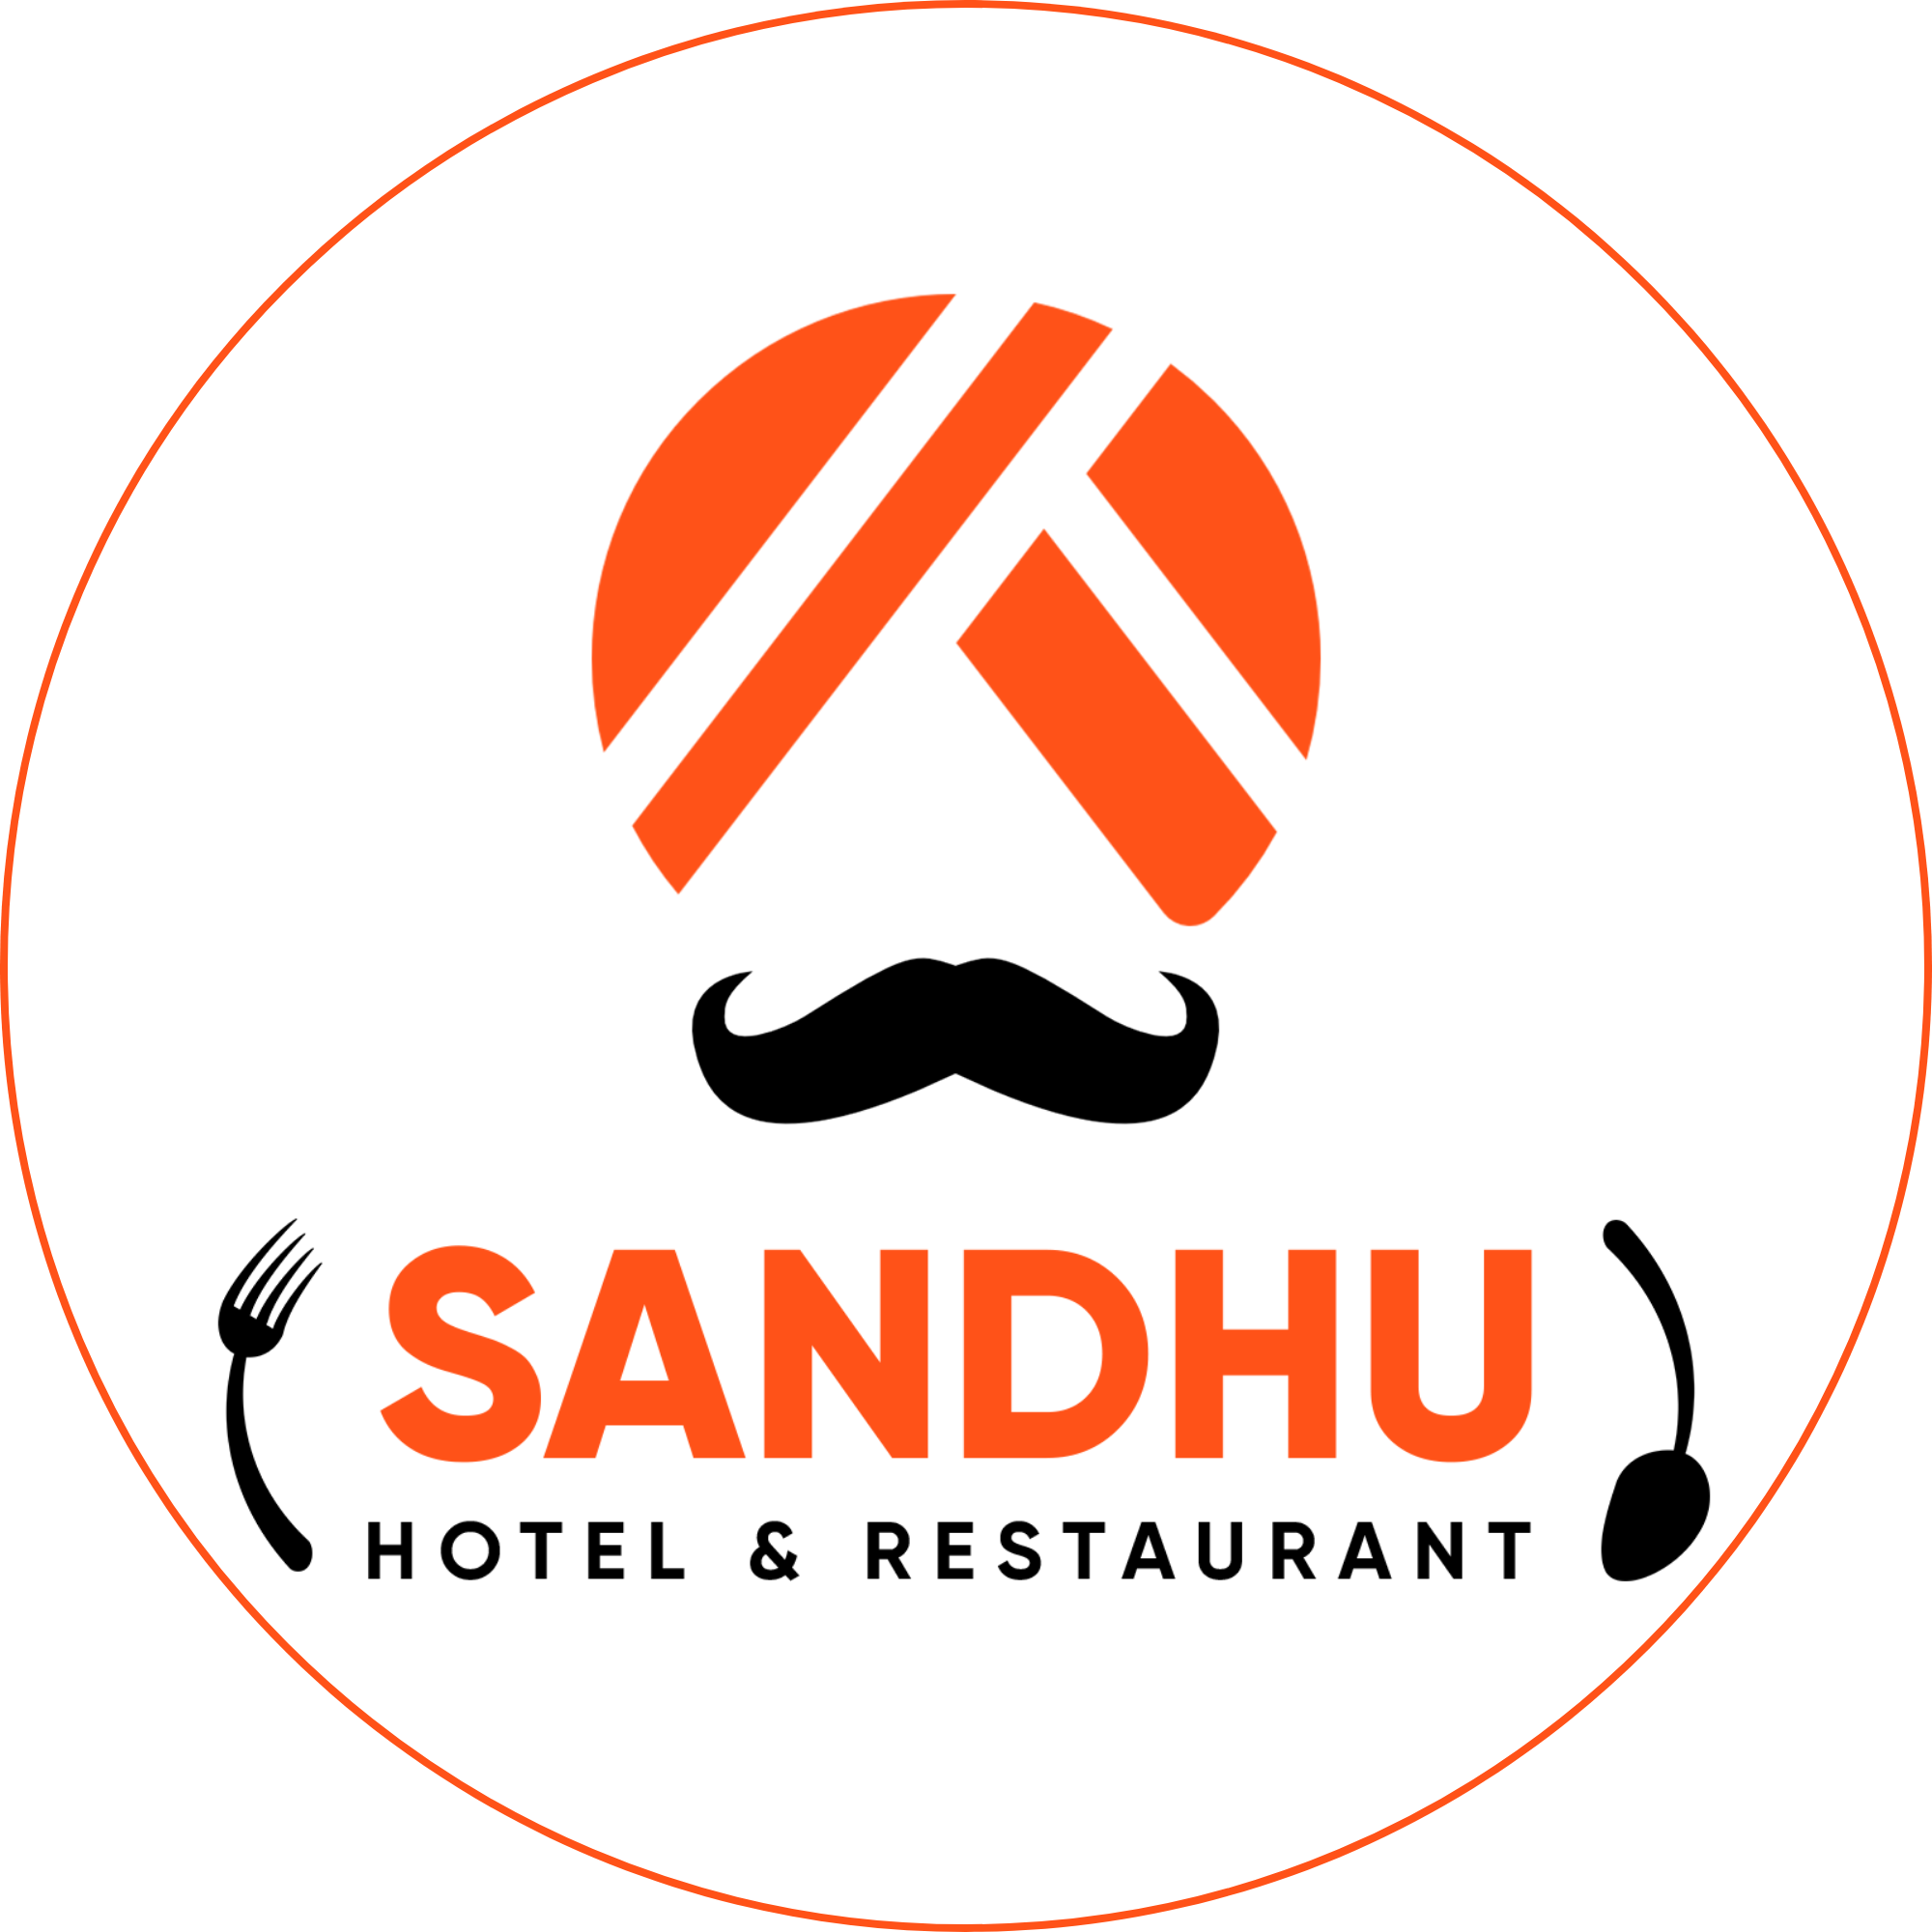 Sandhu Hotel & Restaurant – Sandhu Restaurants